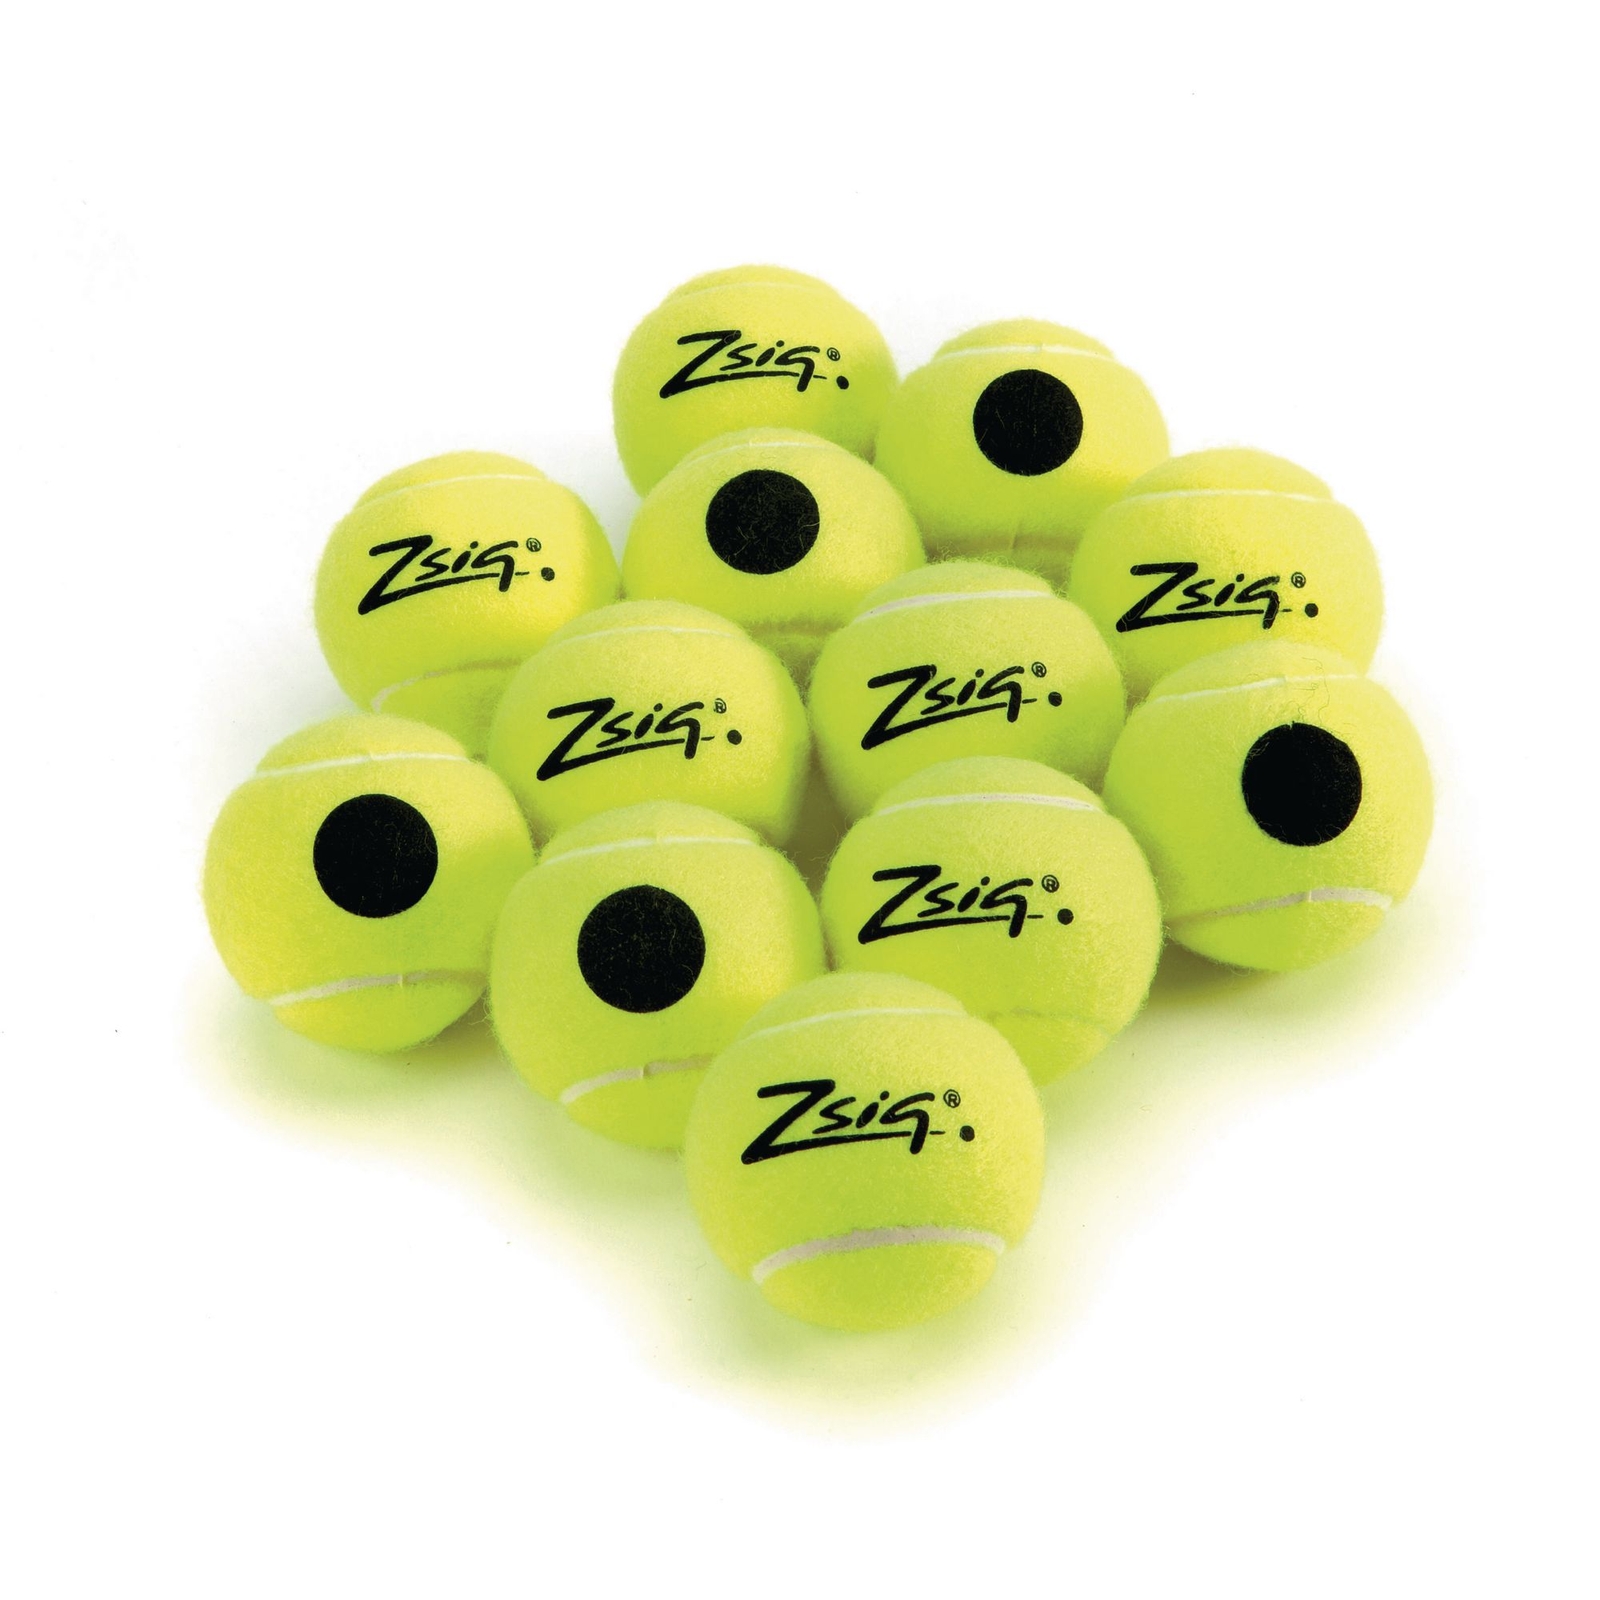 Zsig Black Dot Yellow Tennis Ball - 65mm Diameter - Pack of 12